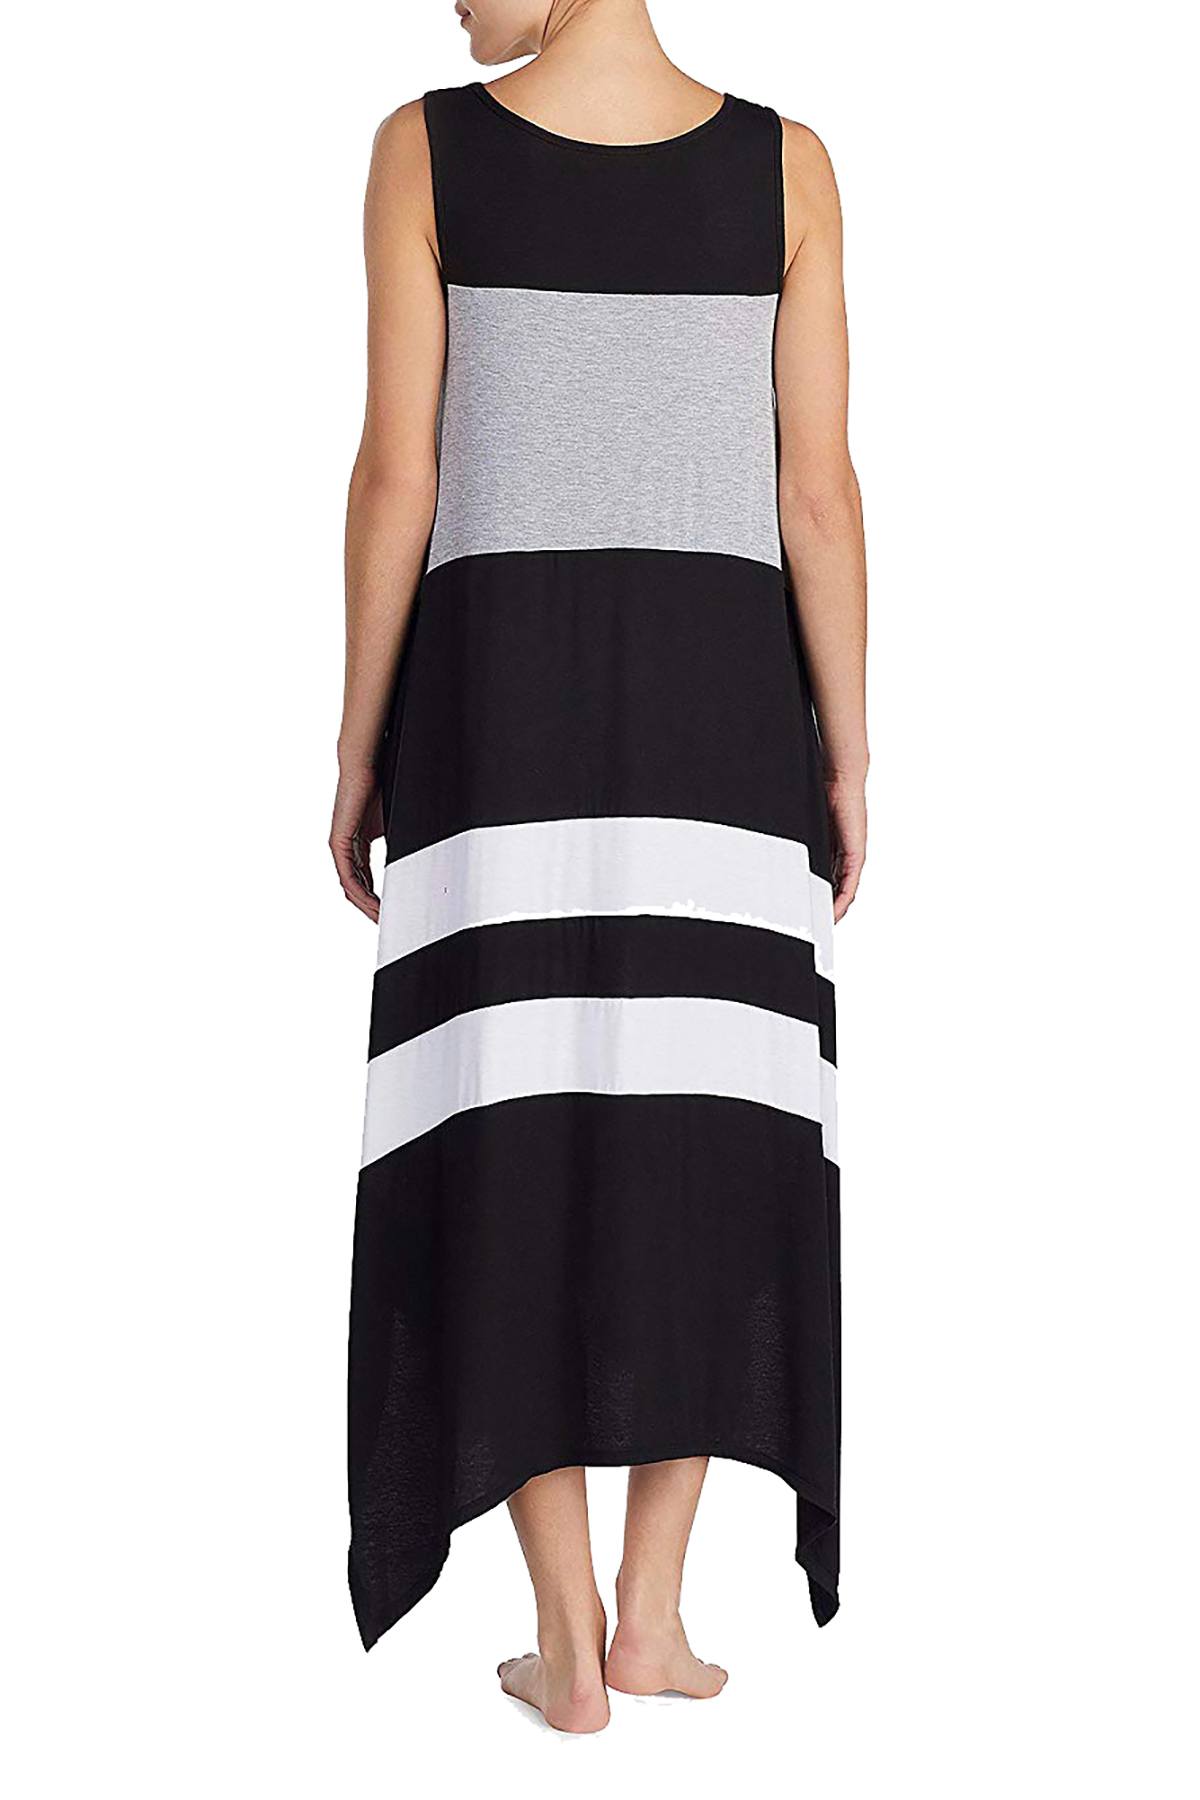 Dkny Black And White Striped Maxi Dress Clearance | website.jkuat.ac.ke